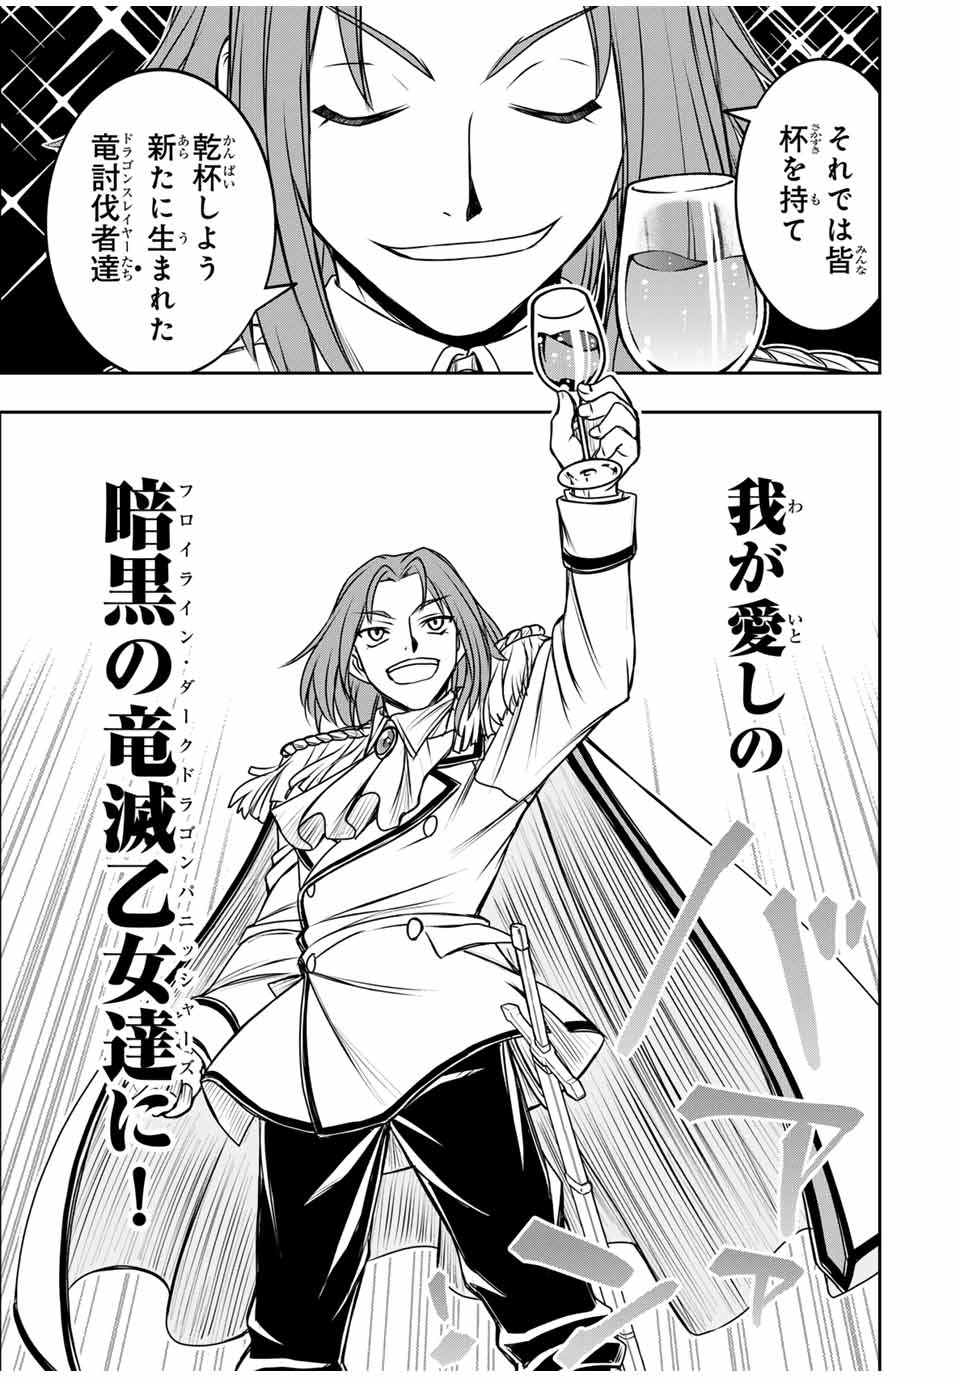 Nengan no Akuyaku Reijou (Last Boss) no Karada wo Teniiretazo!  - Chapter 24 - Page 7